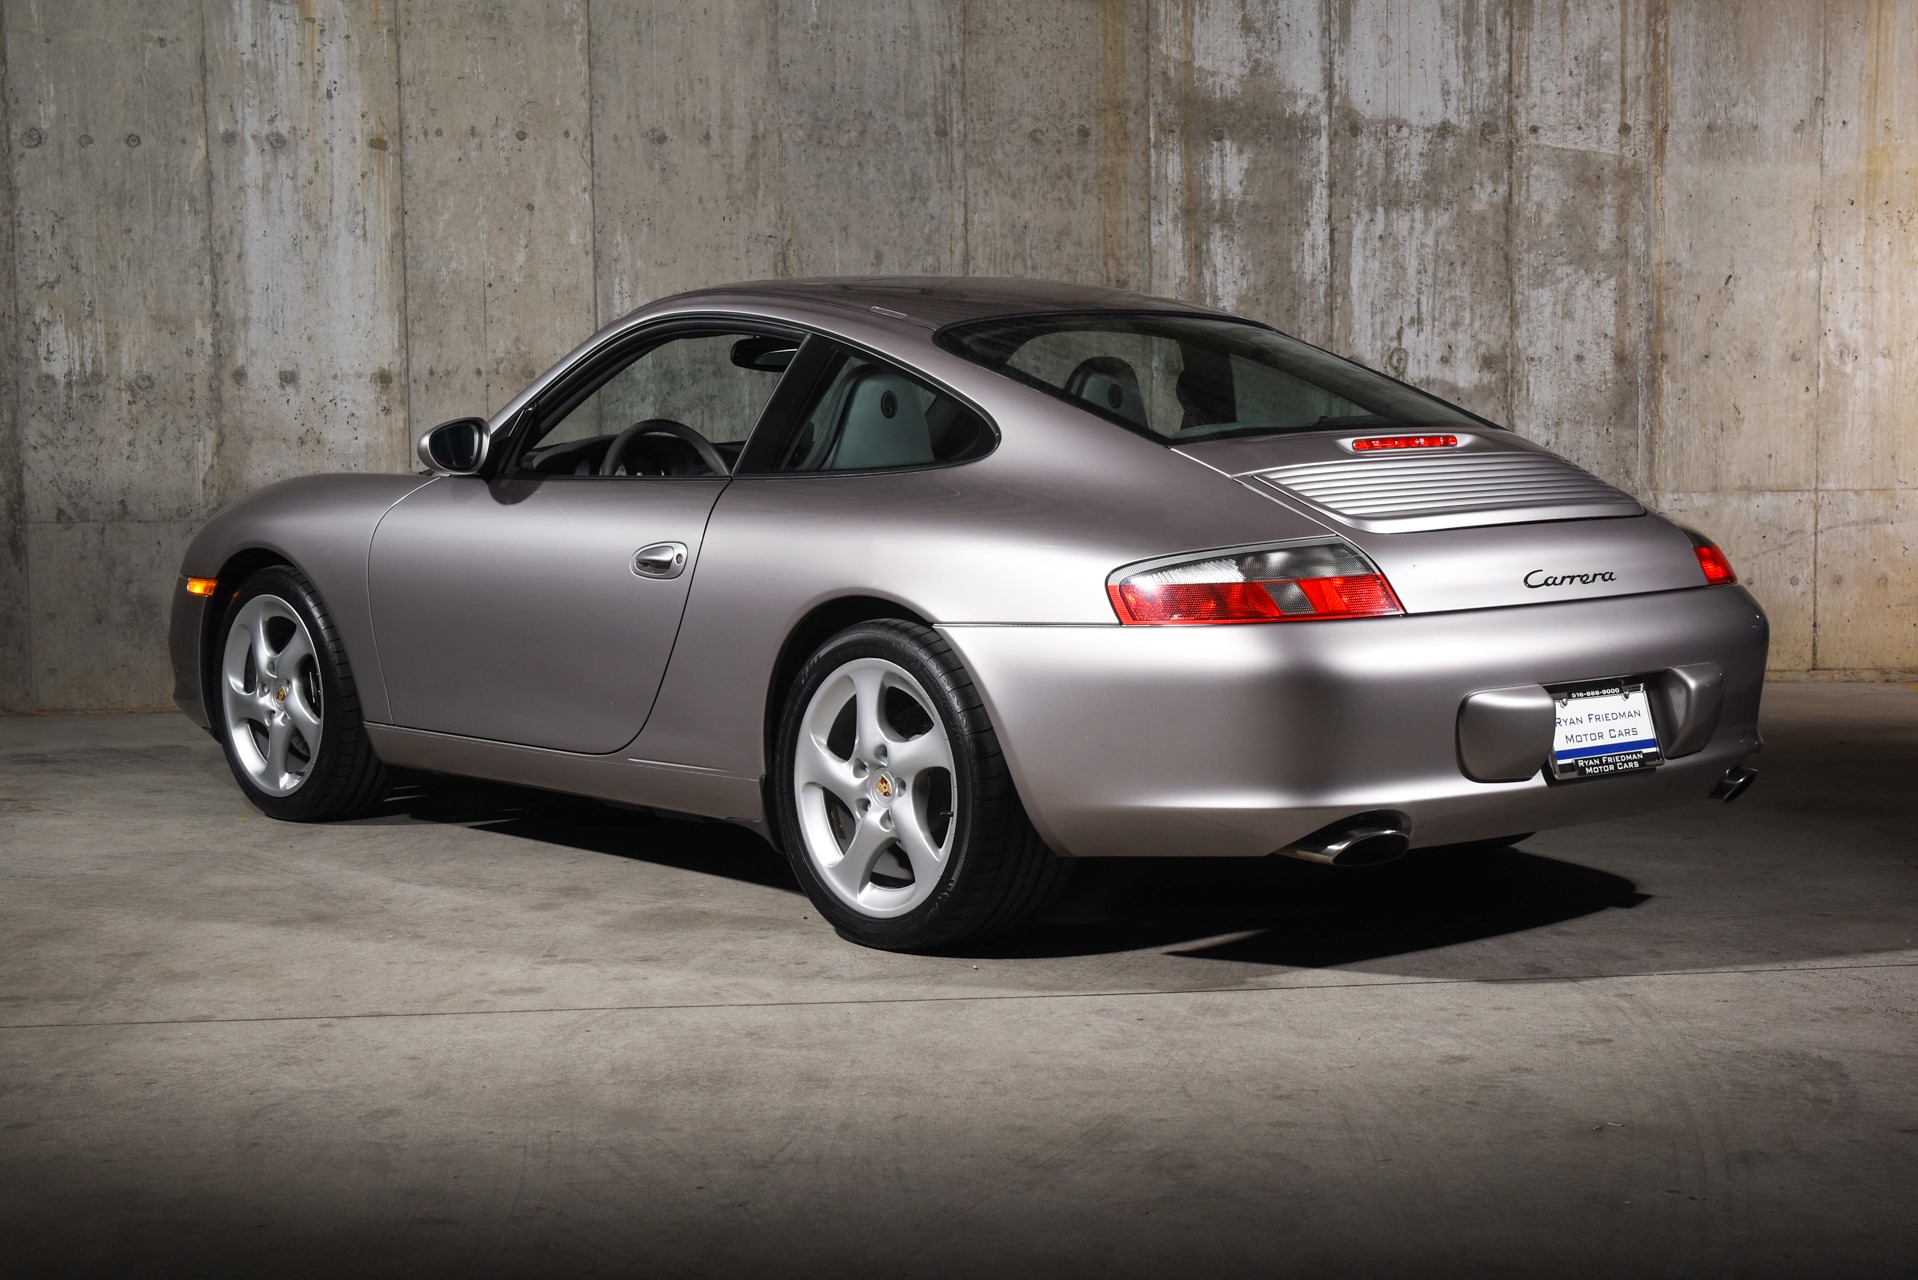 Used 2003 Porsche 911 Carrera For Sale ($57,500) | Ryan Friedman Motor Cars  LLC Stock #1092